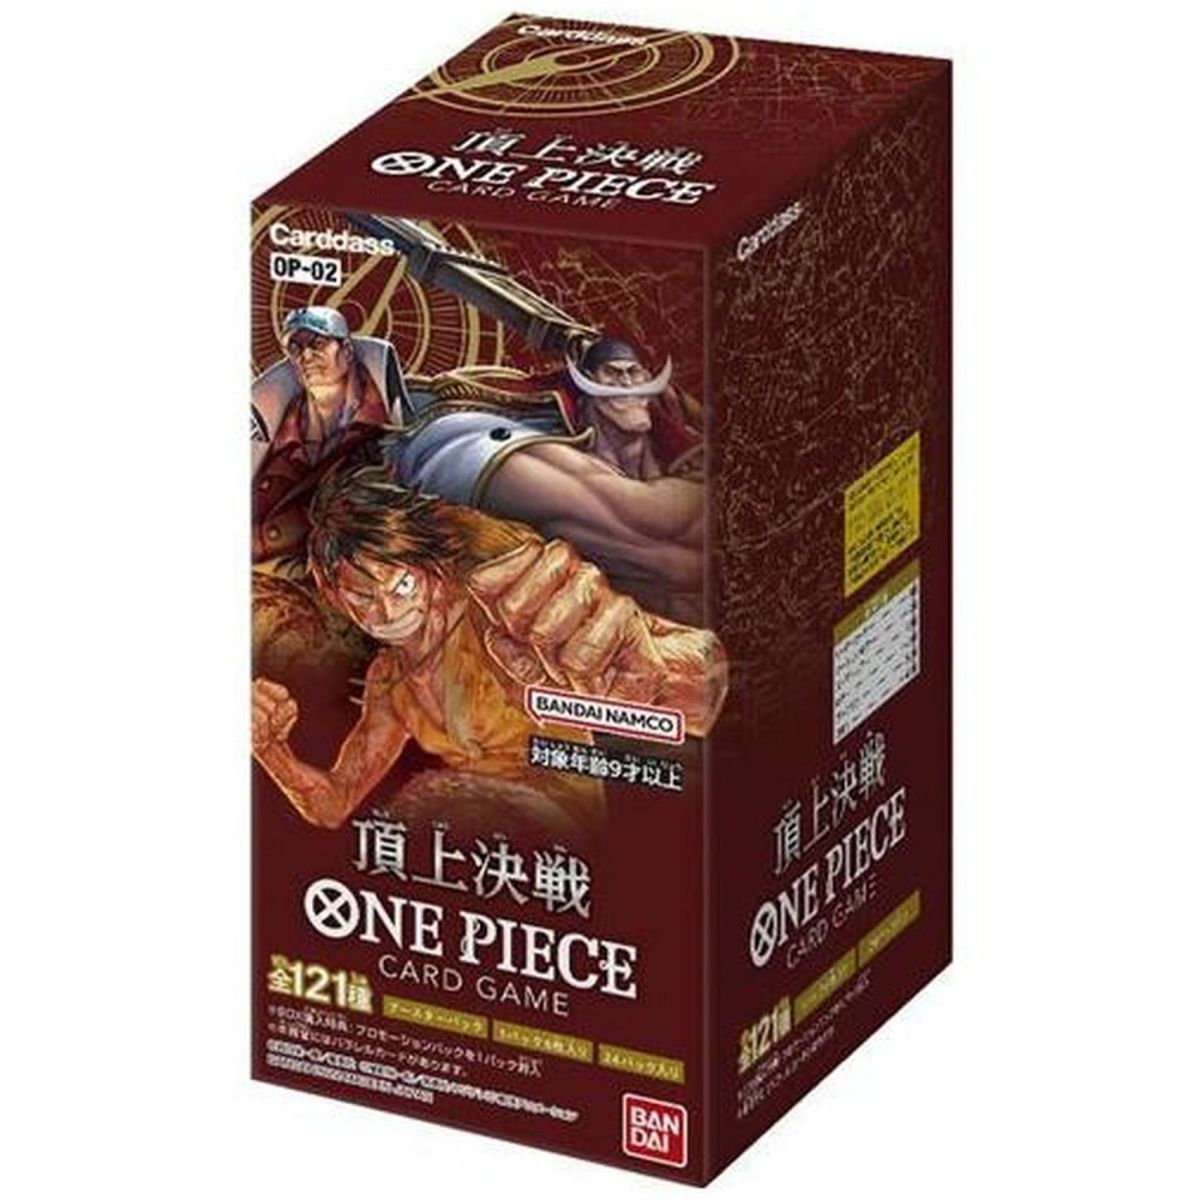 Item One Piece CG - Display - Box of 24 Boosters - Paramount War - OP-02 - JP